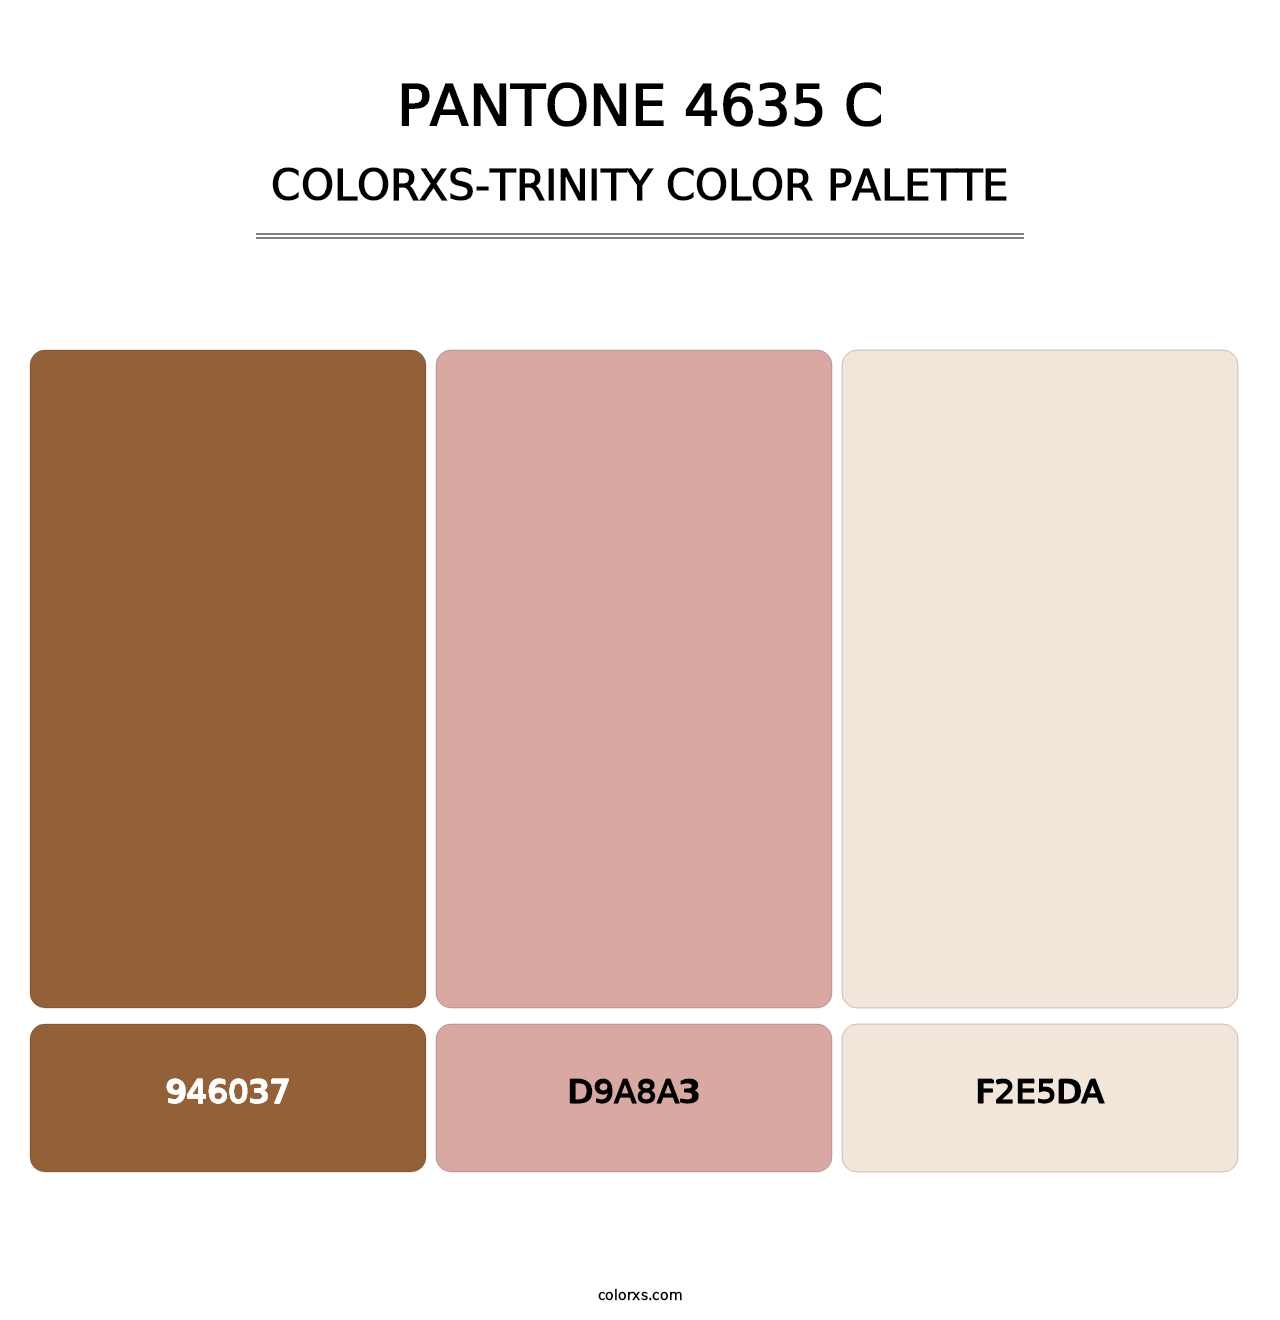 PANTONE 4635 C - Colorxs Trinity Palette